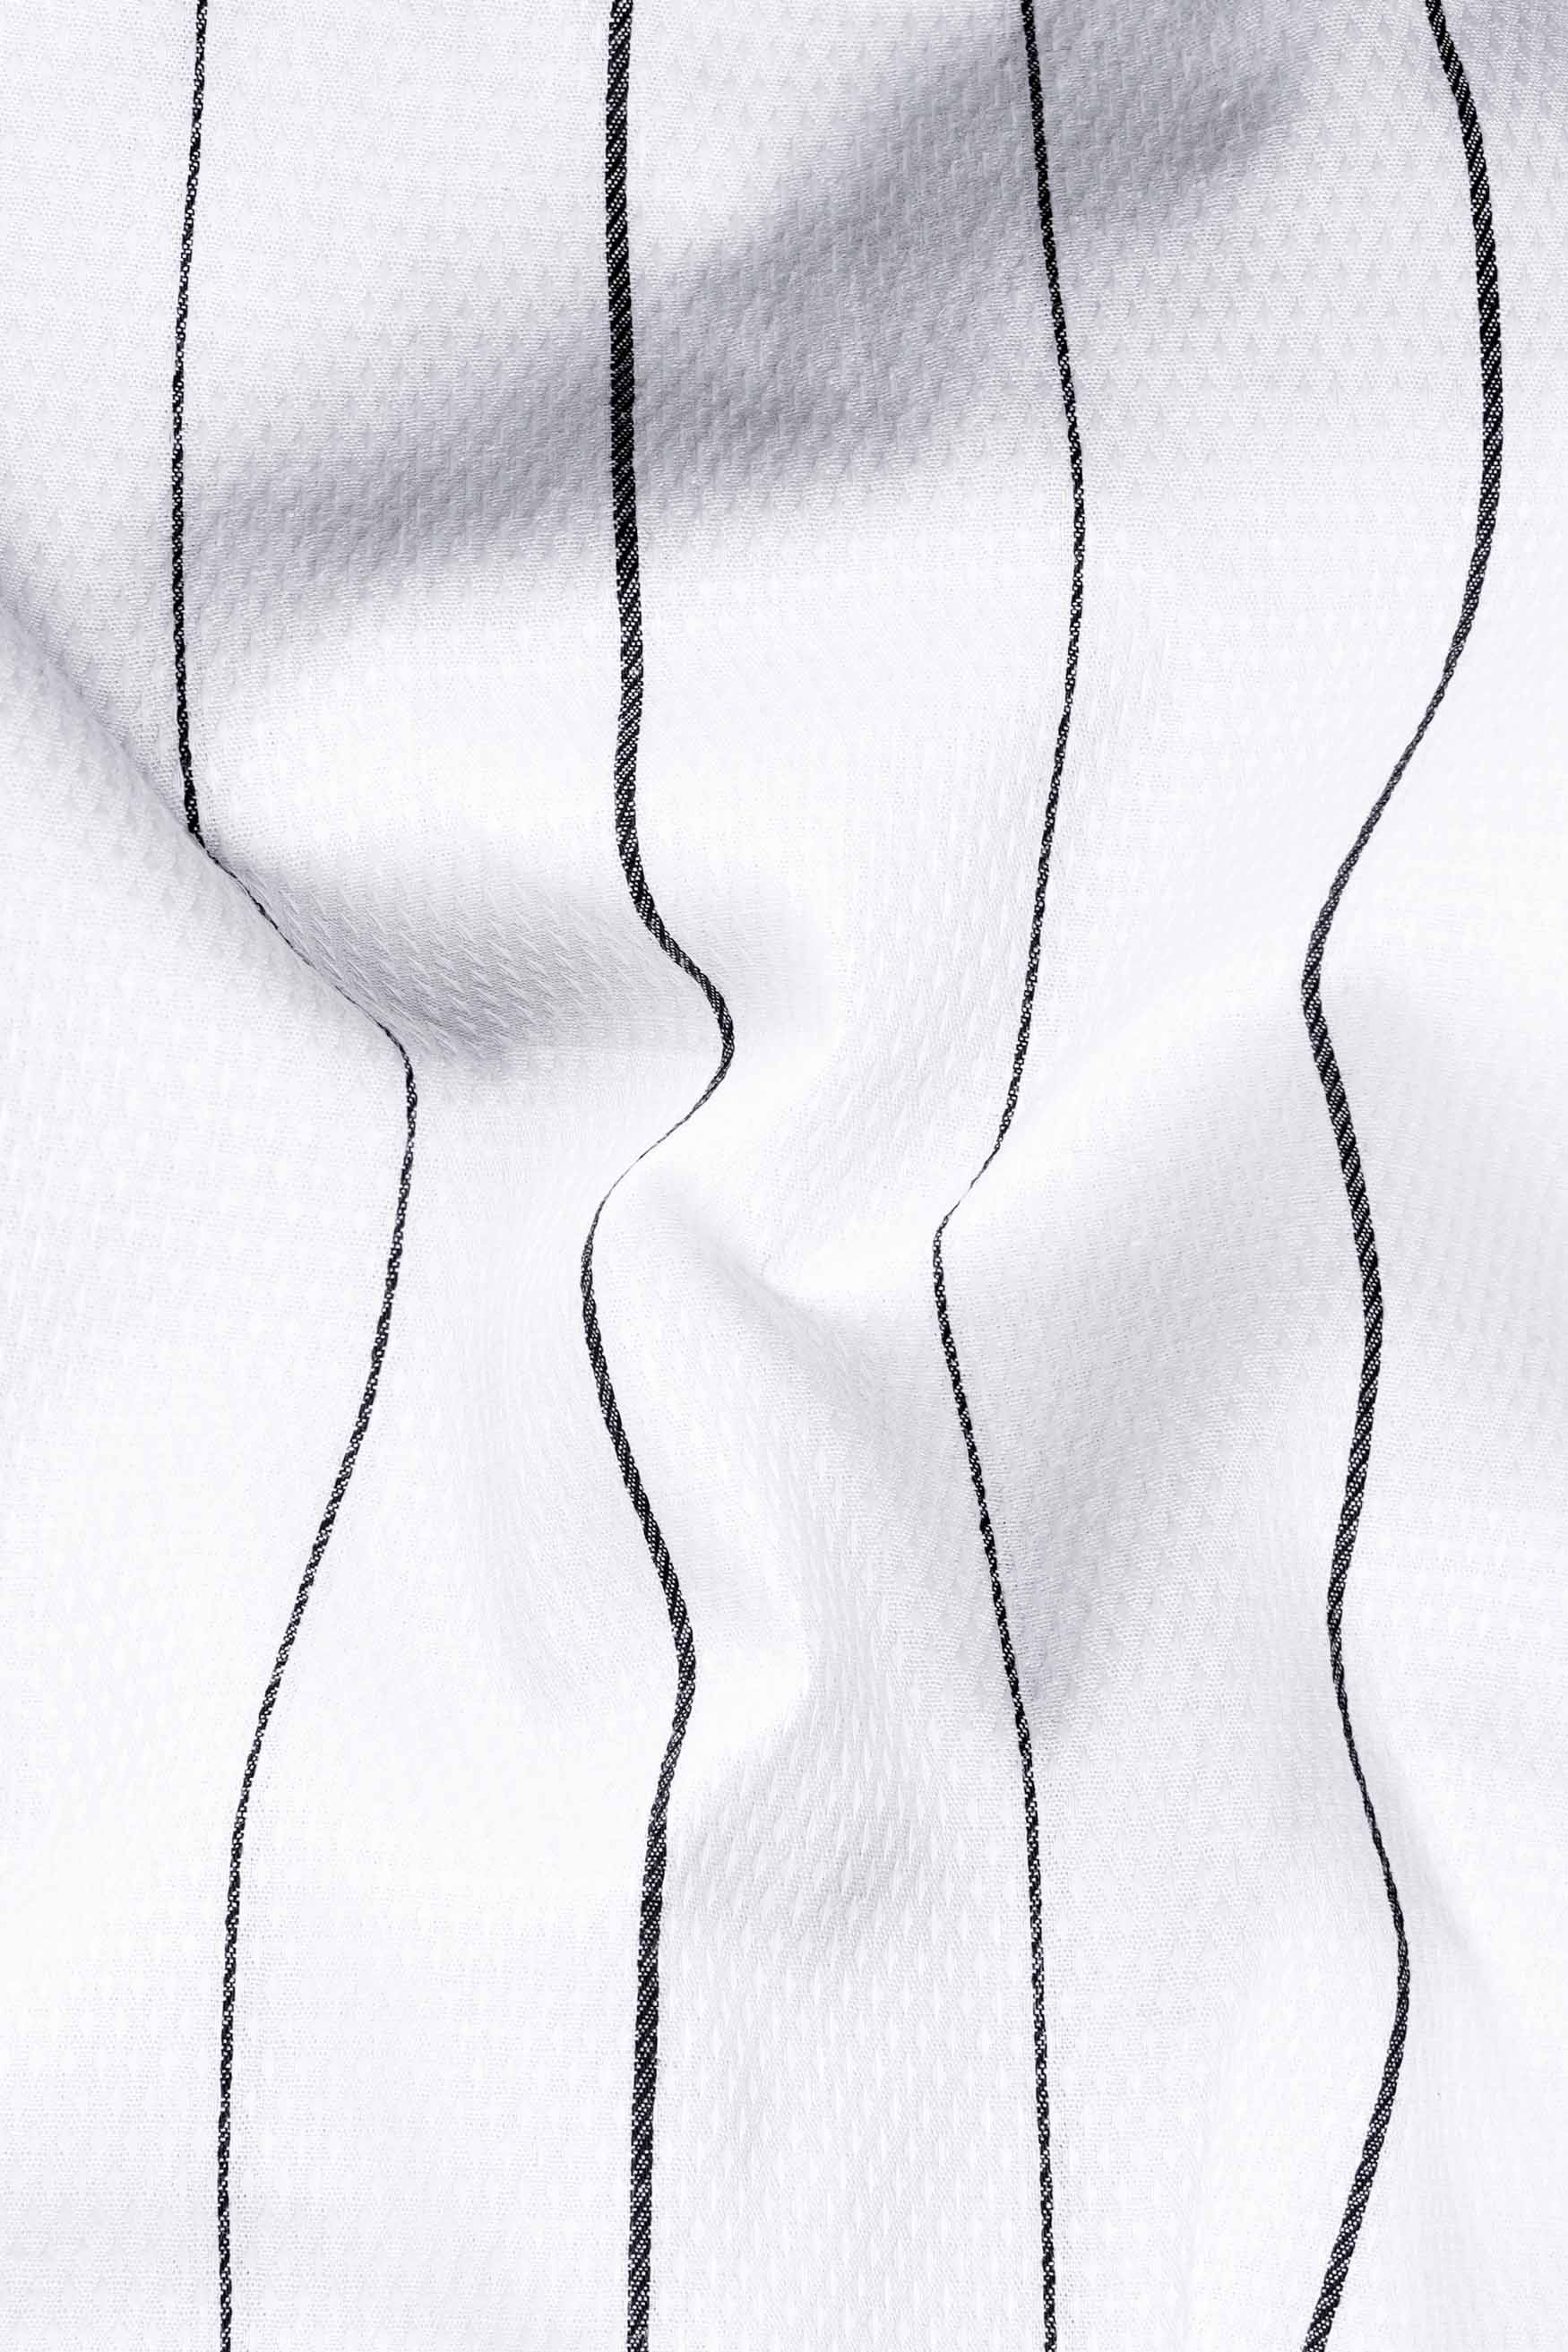 Bright White and Black Striped Dobby Textured Premium Giza Cotton Shirt